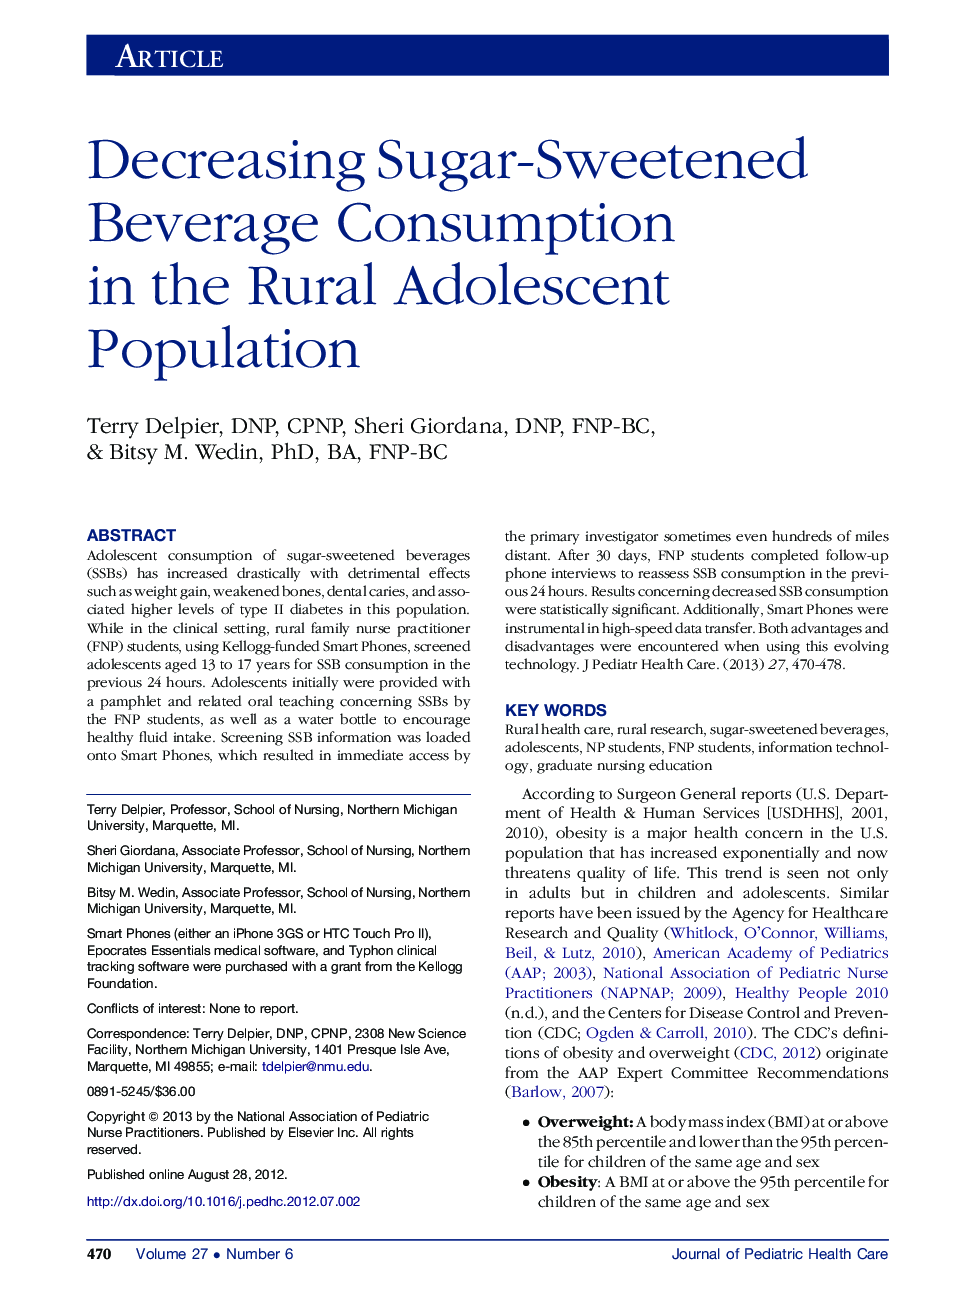 Decreasing Sugar-Sweetened Beverage Consumption in the Rural Adolescent Population 